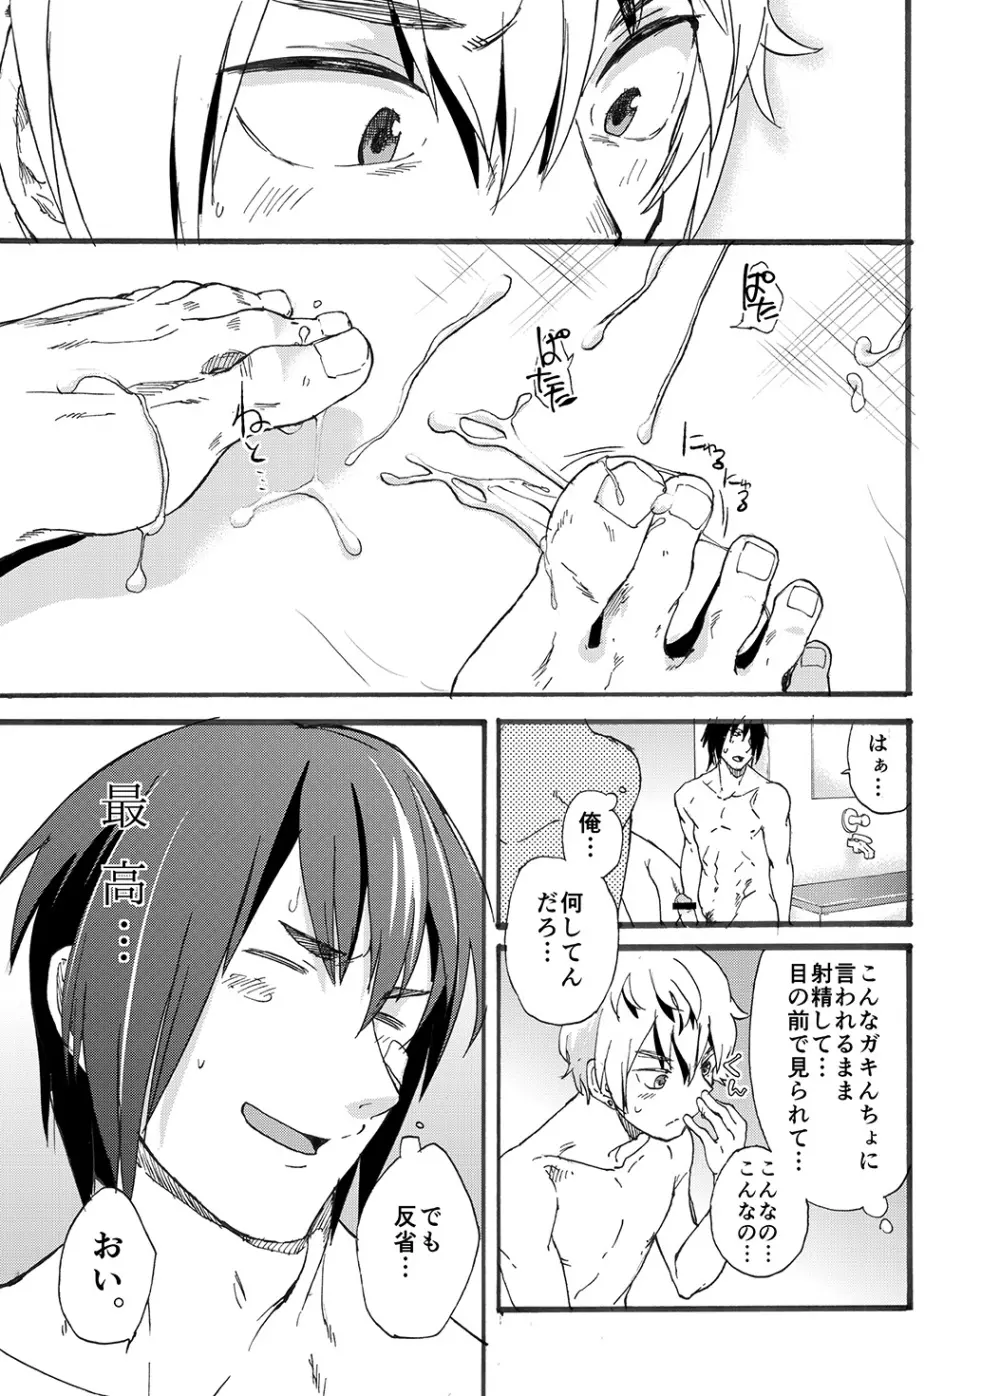 Bathroom magic - 三船リオ - - page23